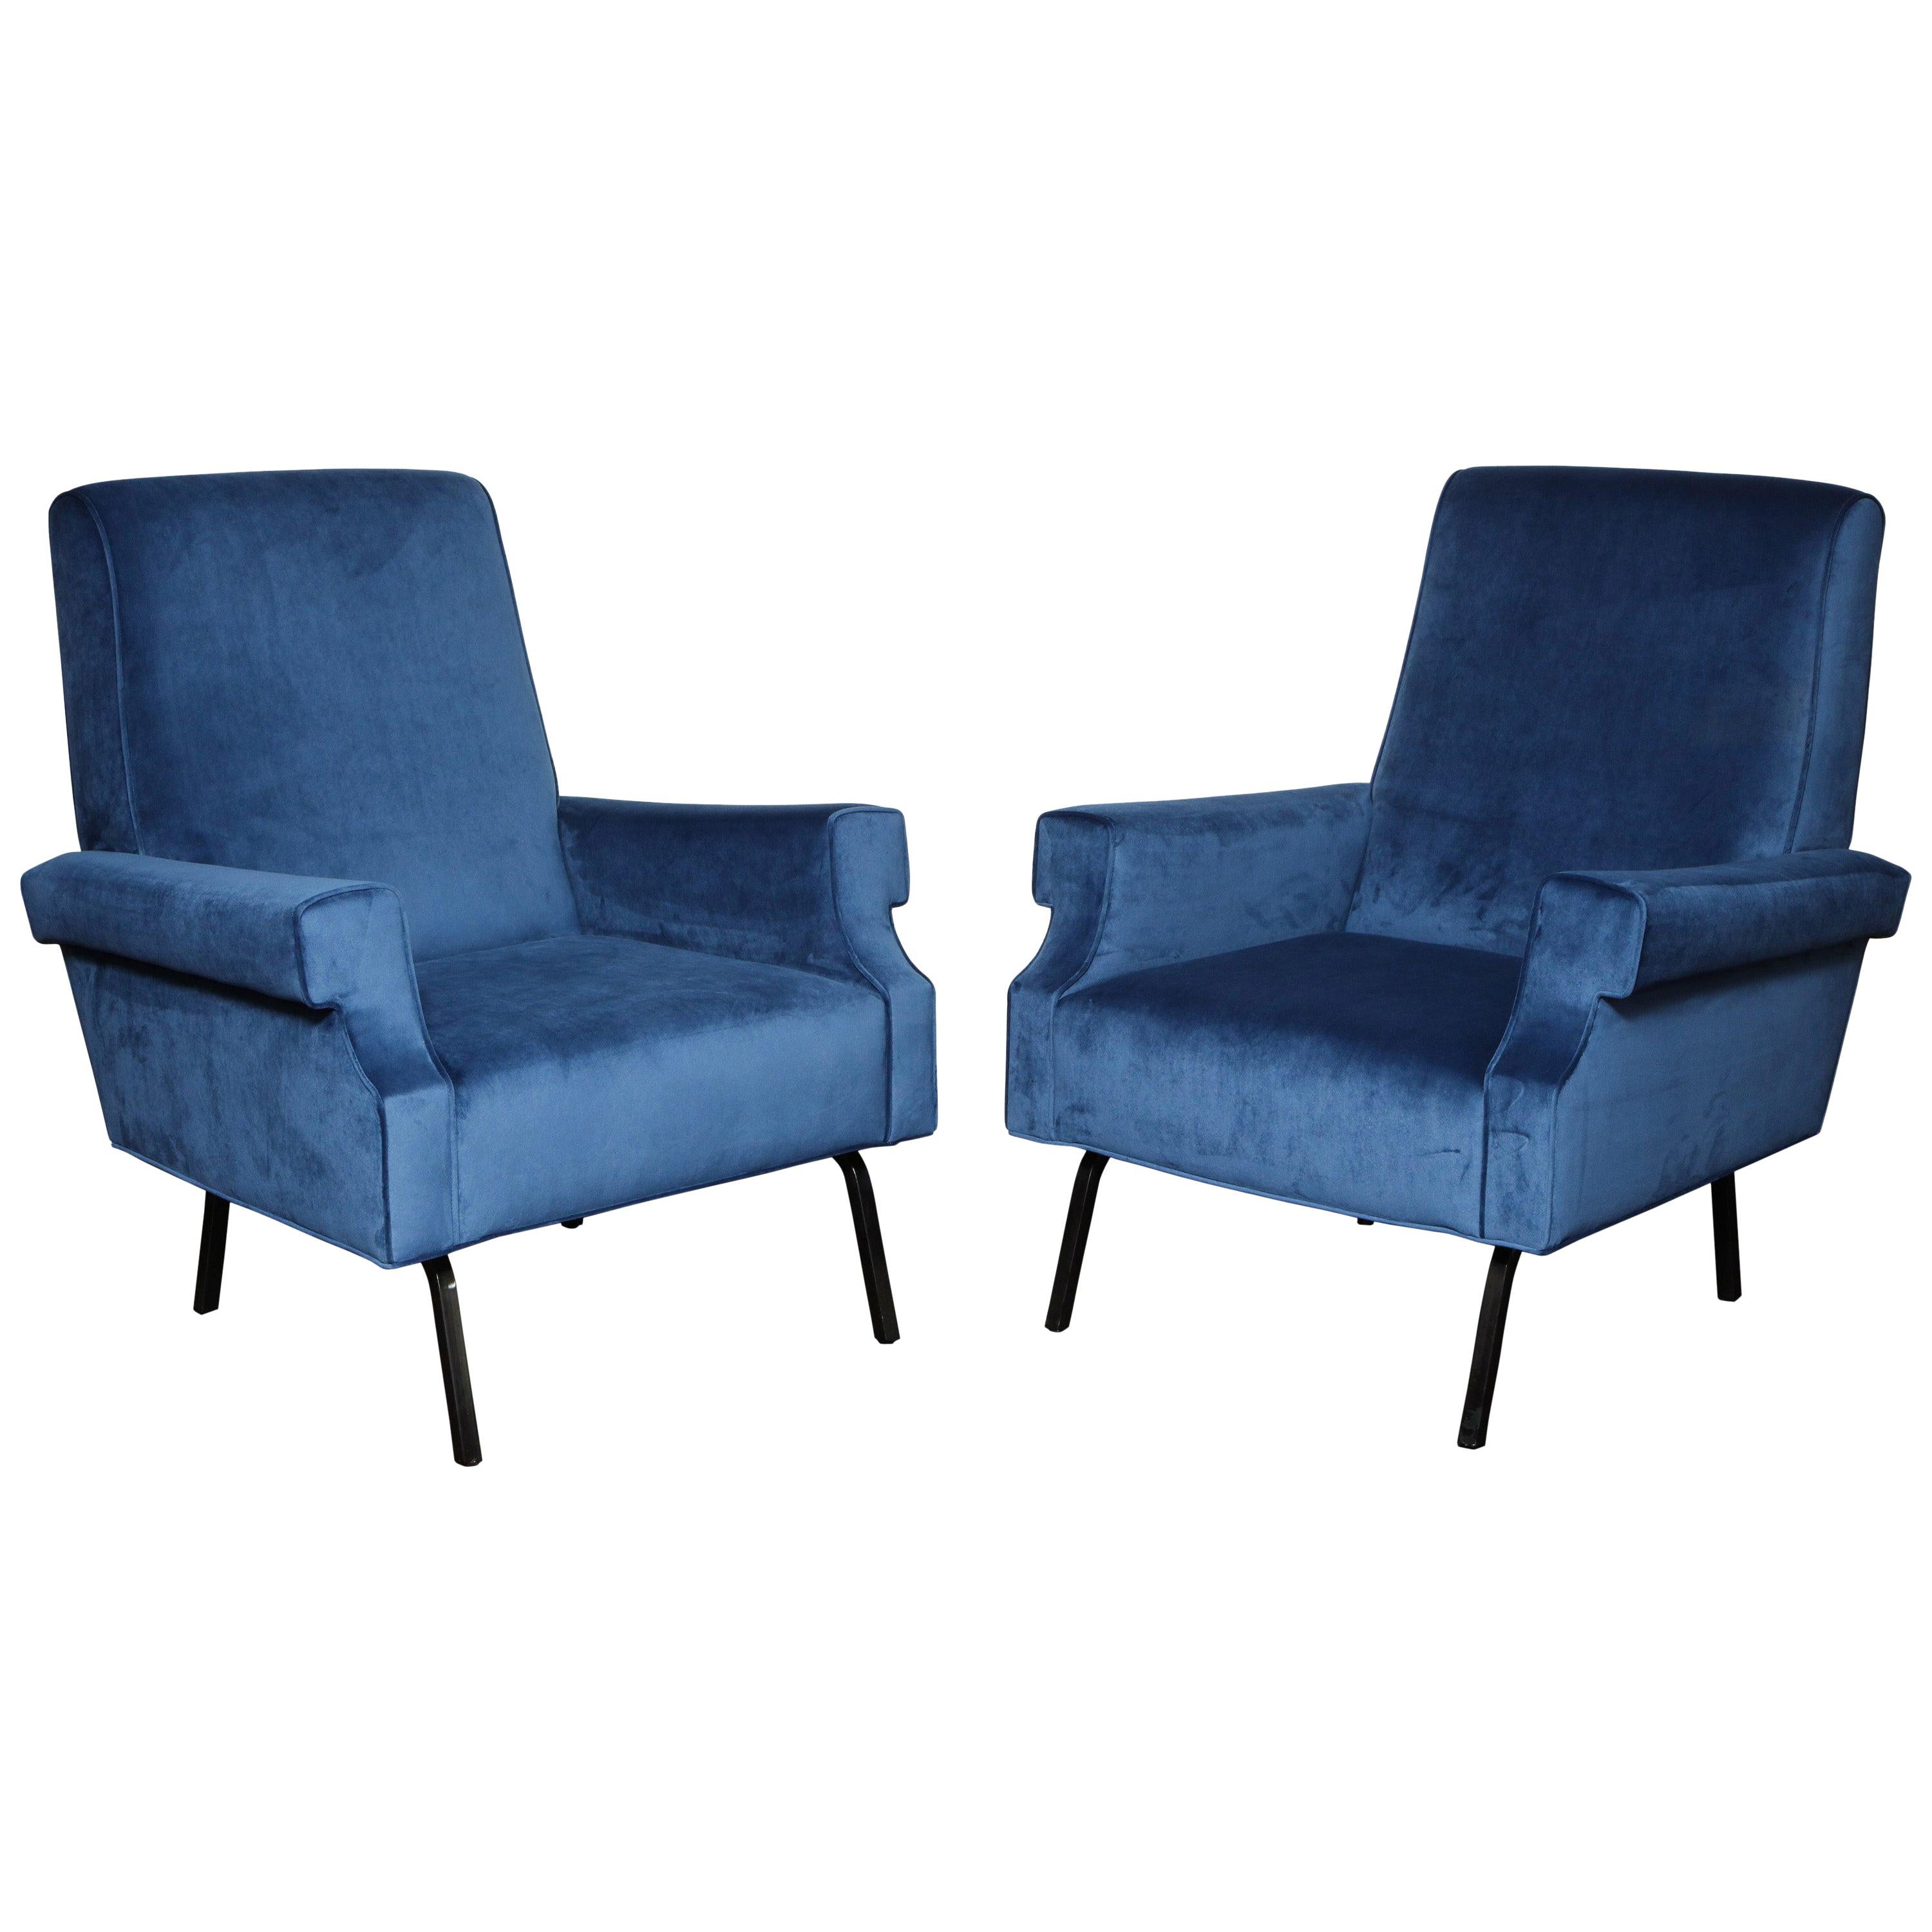 Pair of Mid-Century Modern Blue Velvet Chairs with Black Iron Legs